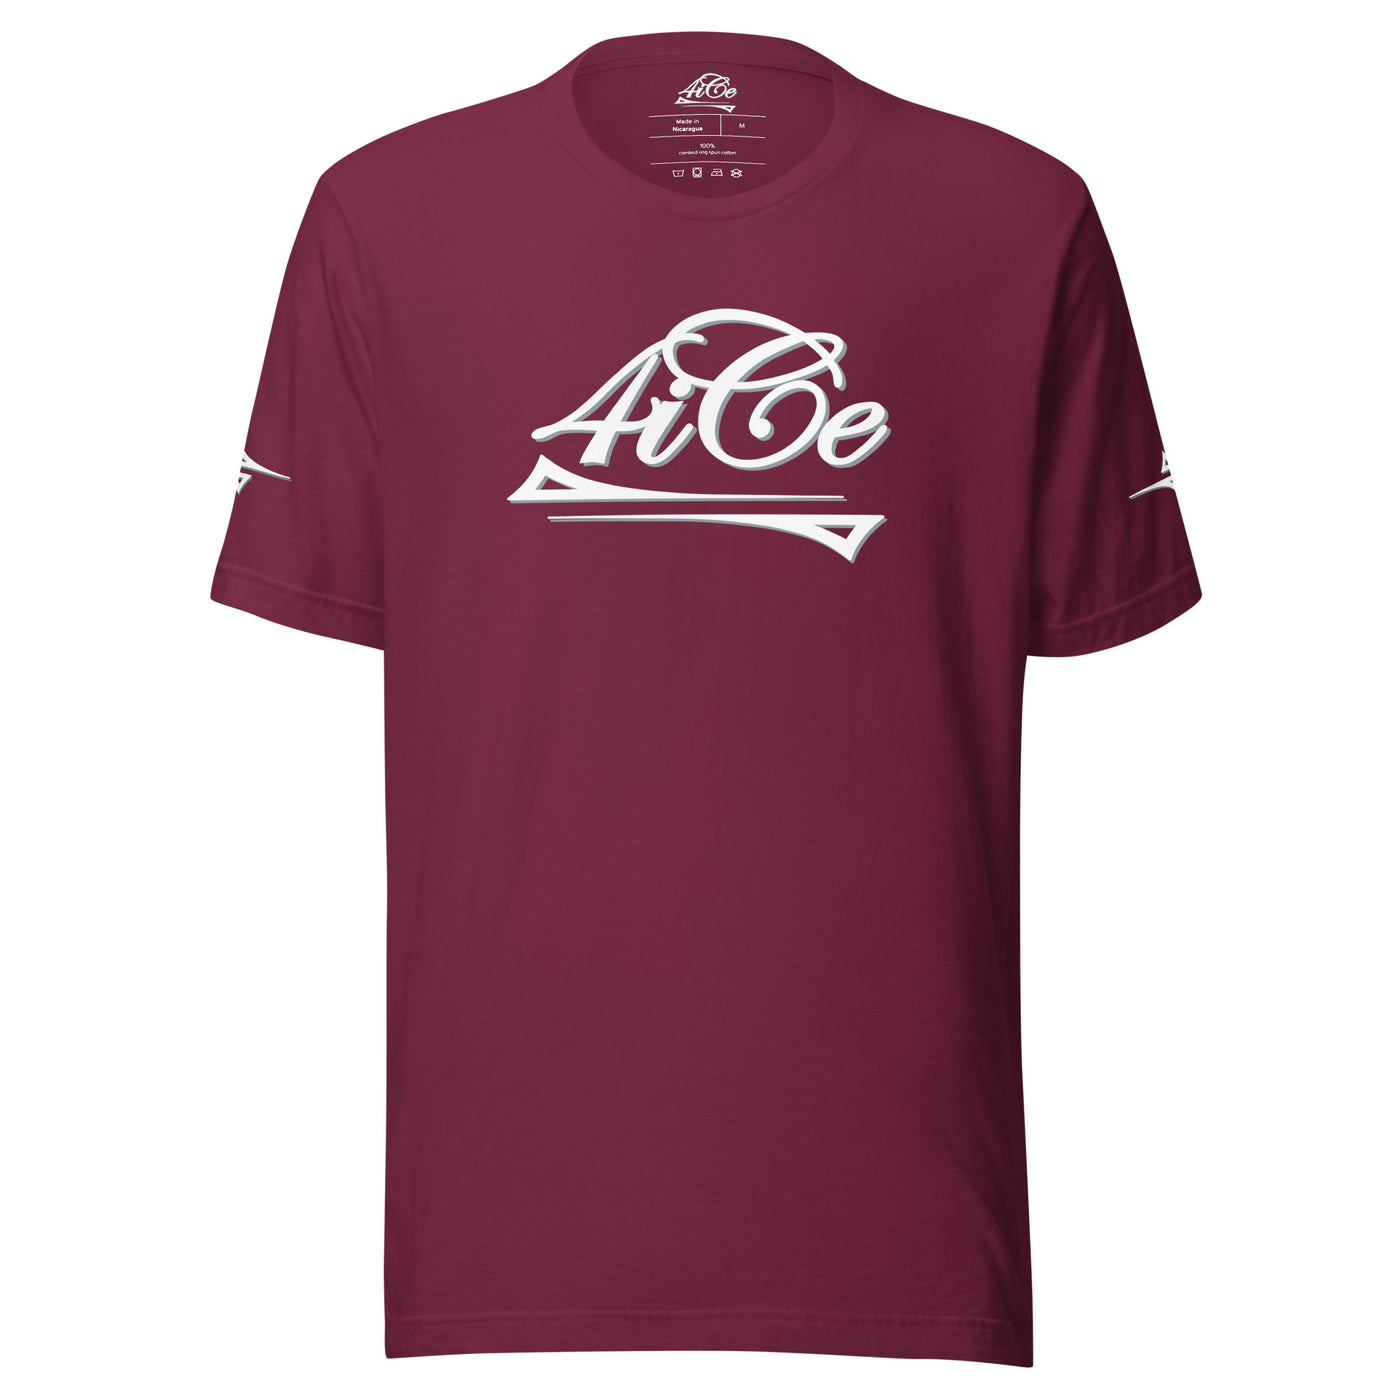 4iCe Elite Boxing Apparel maroon t-shirt